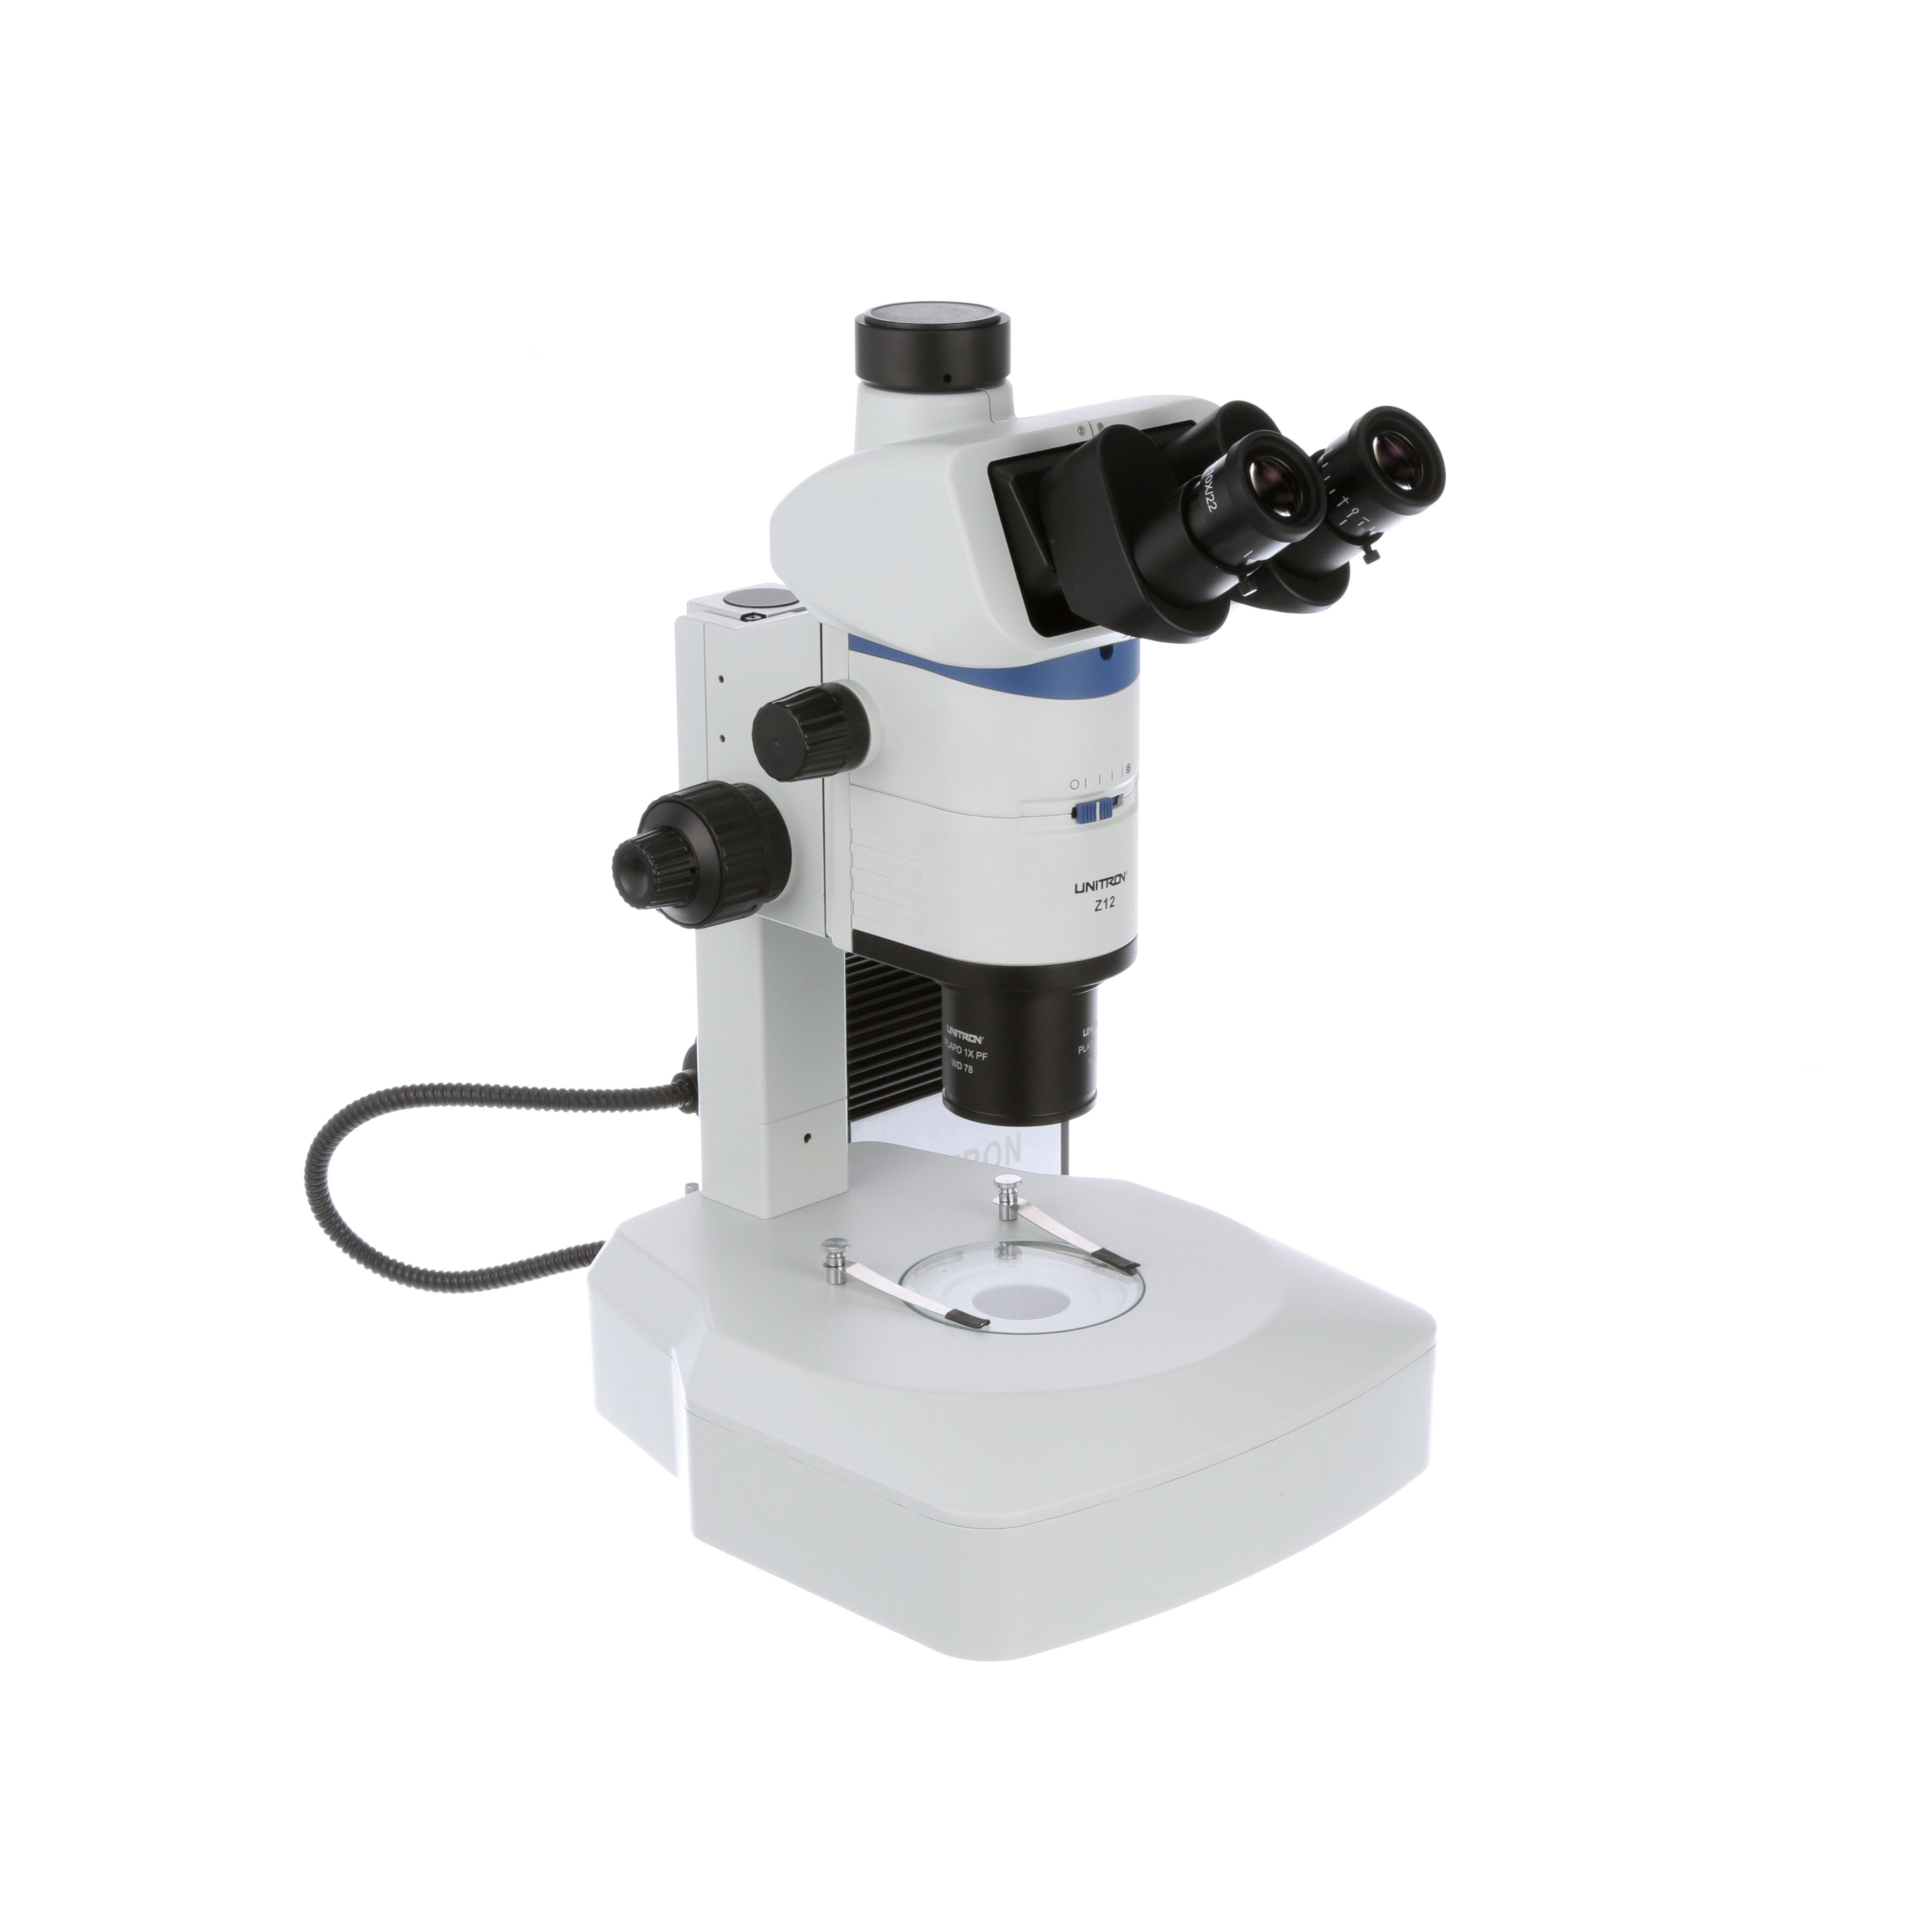 Meyer Instruments, Inc., has the Unitron Z12 Zoomer Series Stereomicroscopes